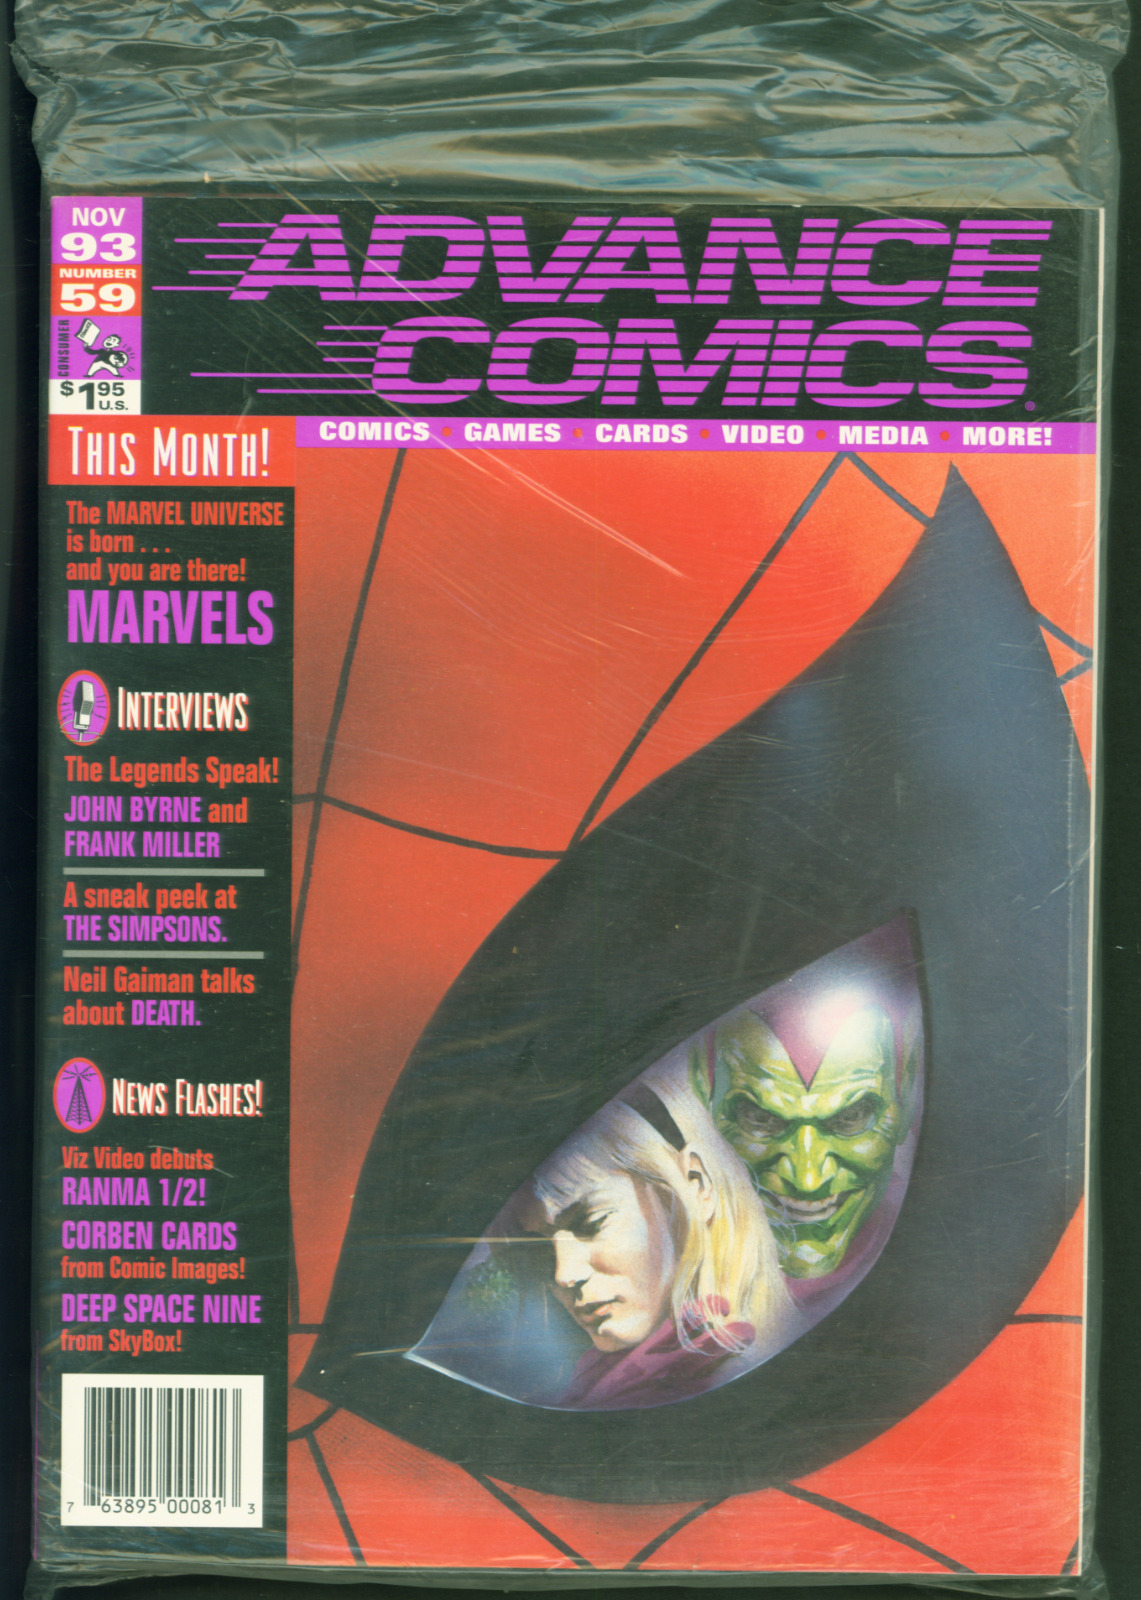 VTG 1993 Advance Comics #59 Alex Ross Spider-Man Cover w/Trading Cards